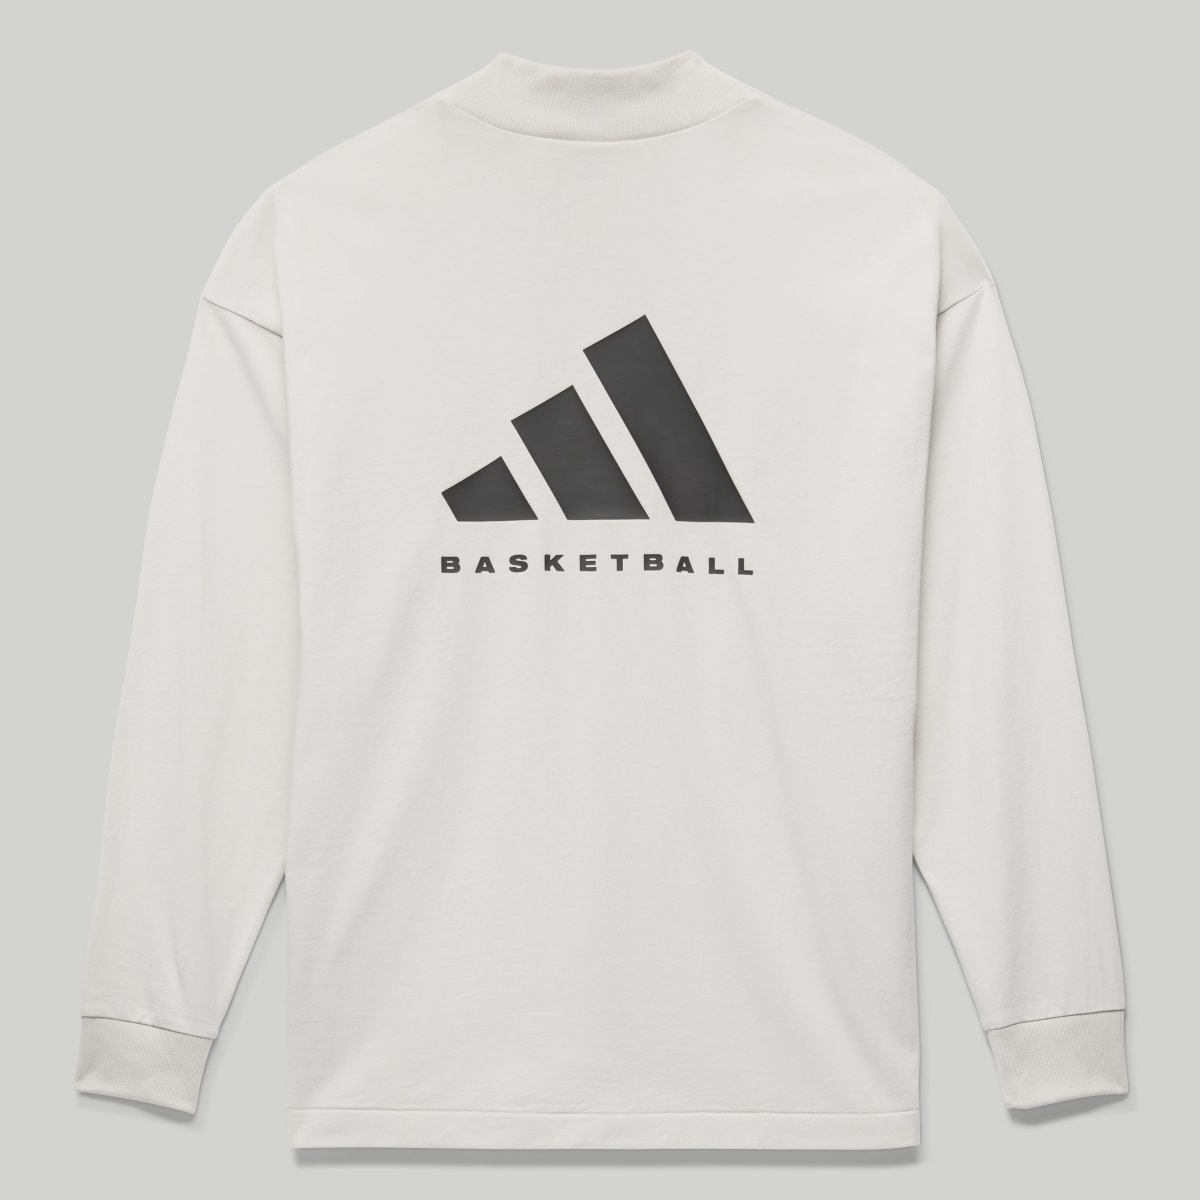 Adidas Basketball Long Sleeve Tee. 4